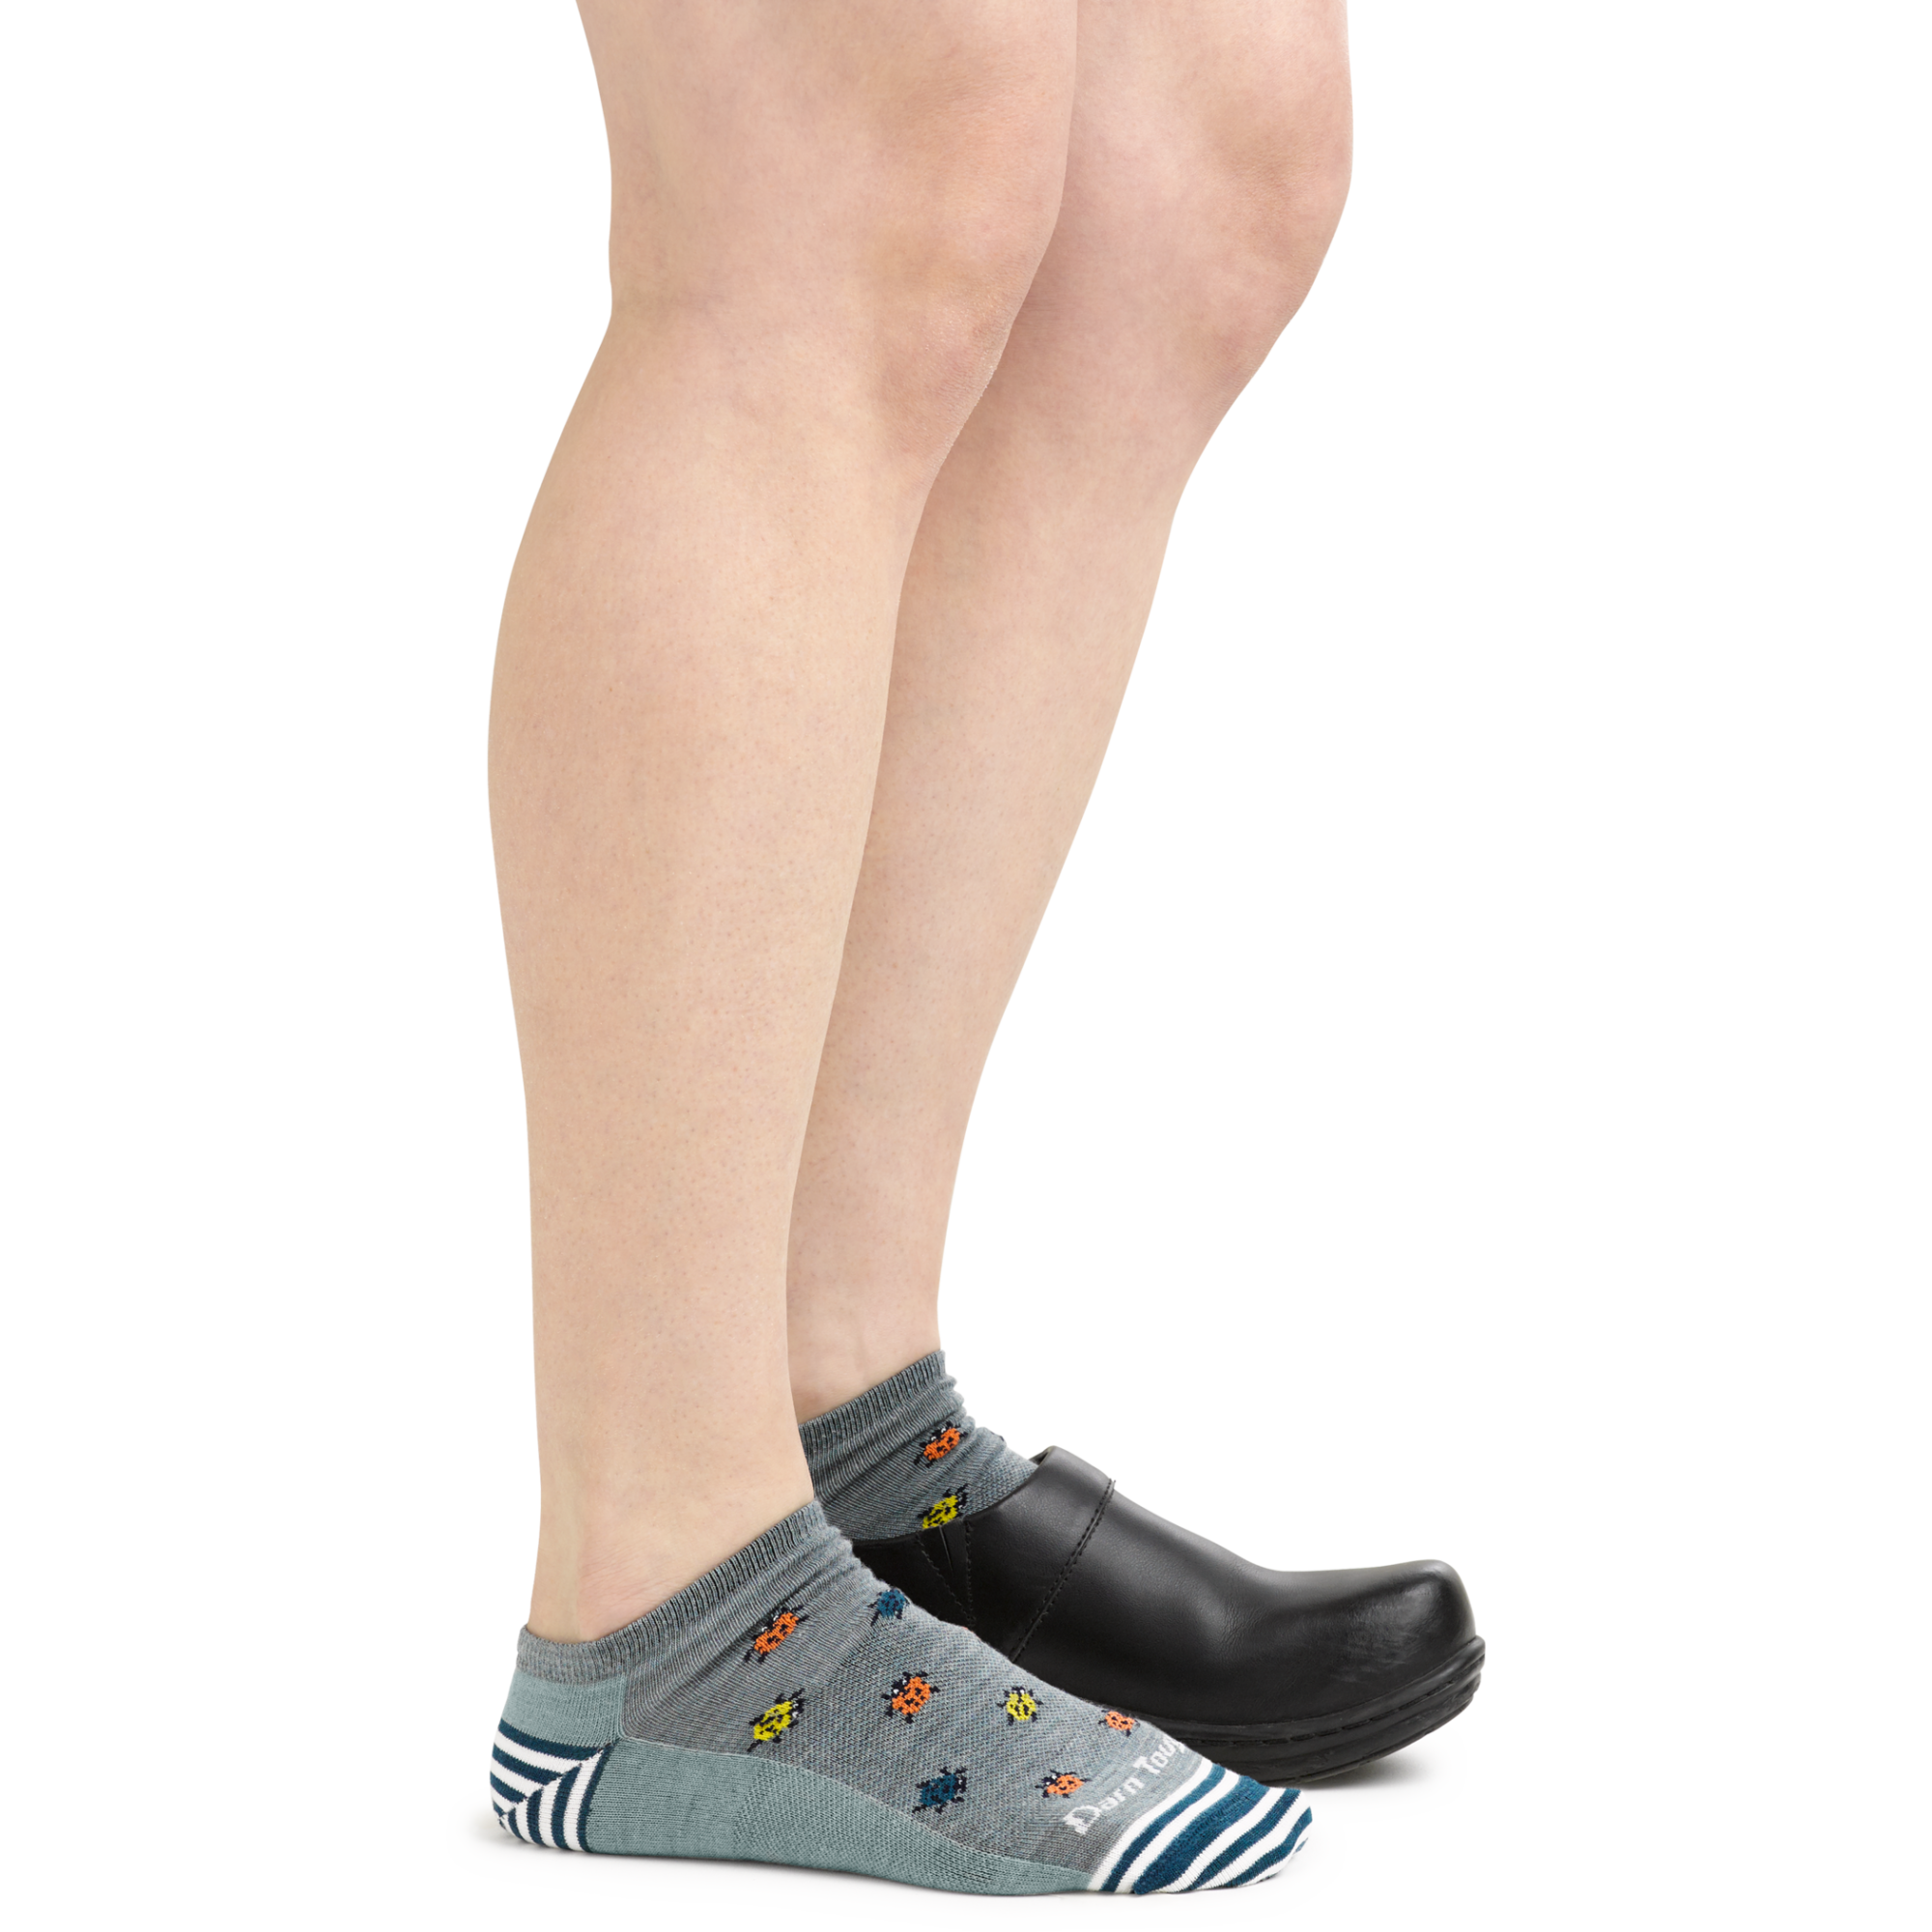 6074 Women's Lucky Lady No Show Lightweight Lifestyle Socks in seafoam on foot wearing clogs